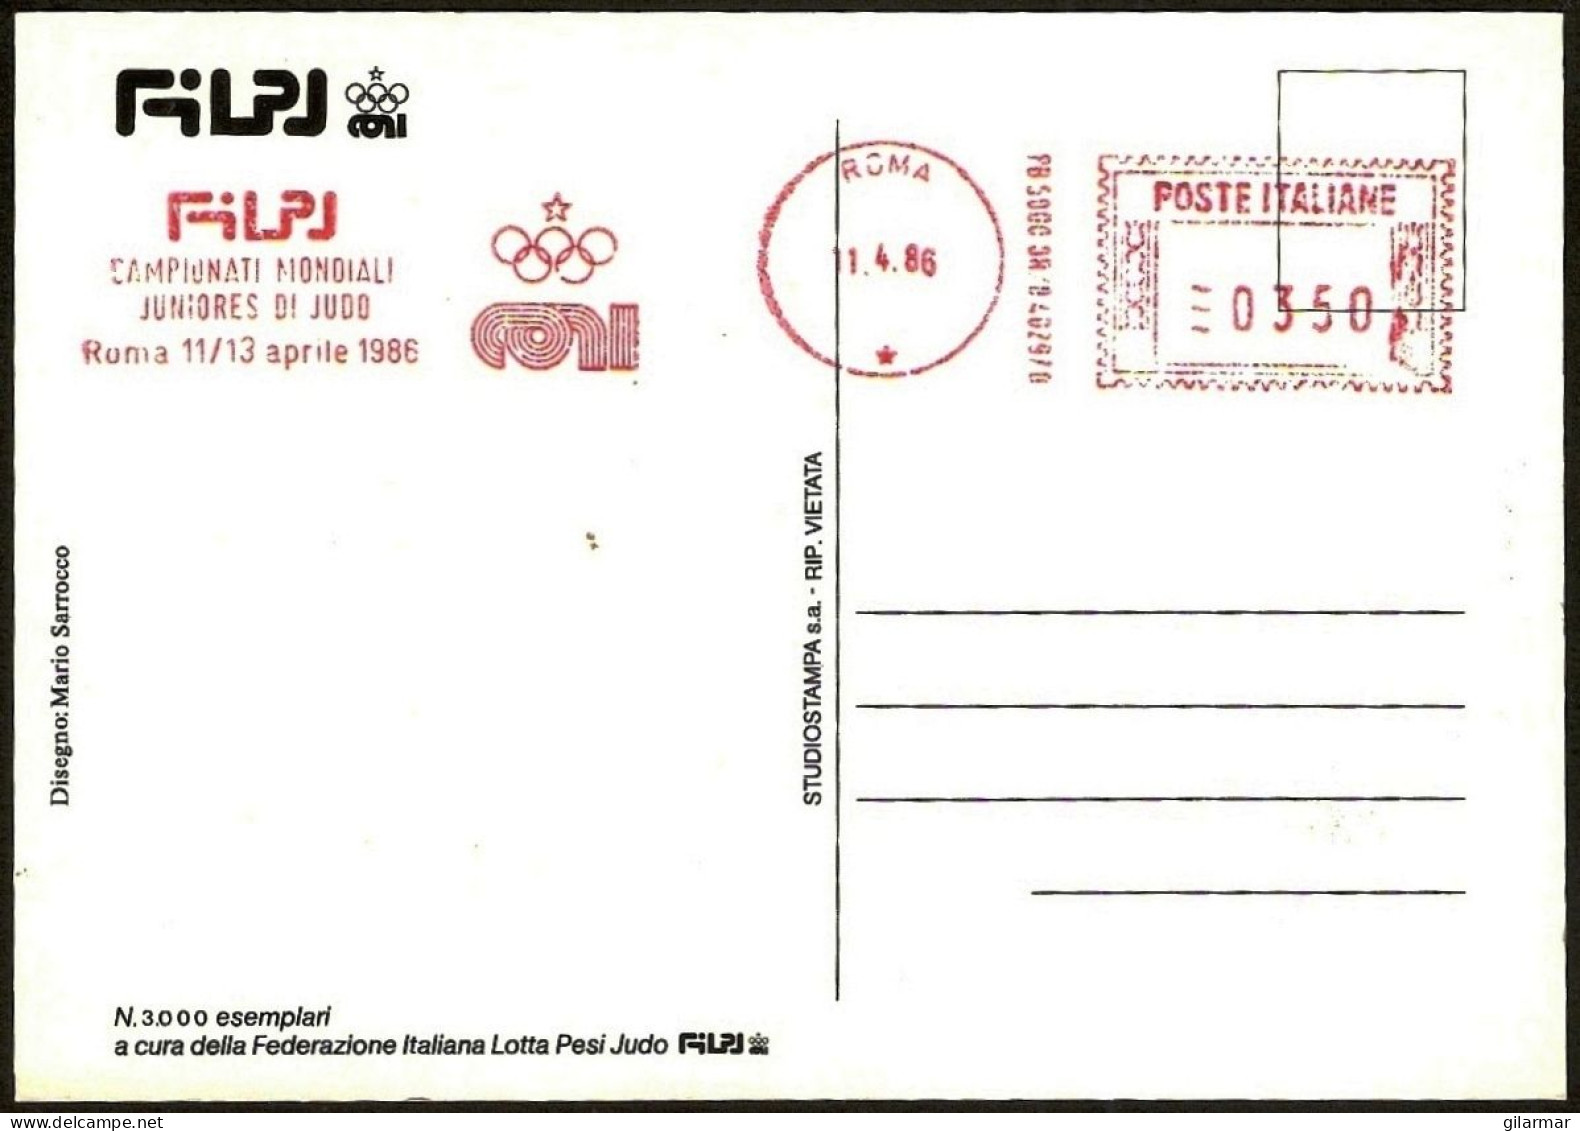 ITALIA ROMA 1986 - CAMPIONATI MONDIALI JUNIORES DI JUDO - CARTOLINA UFFICIALE + METER CONI / FILPJ - M - Judo